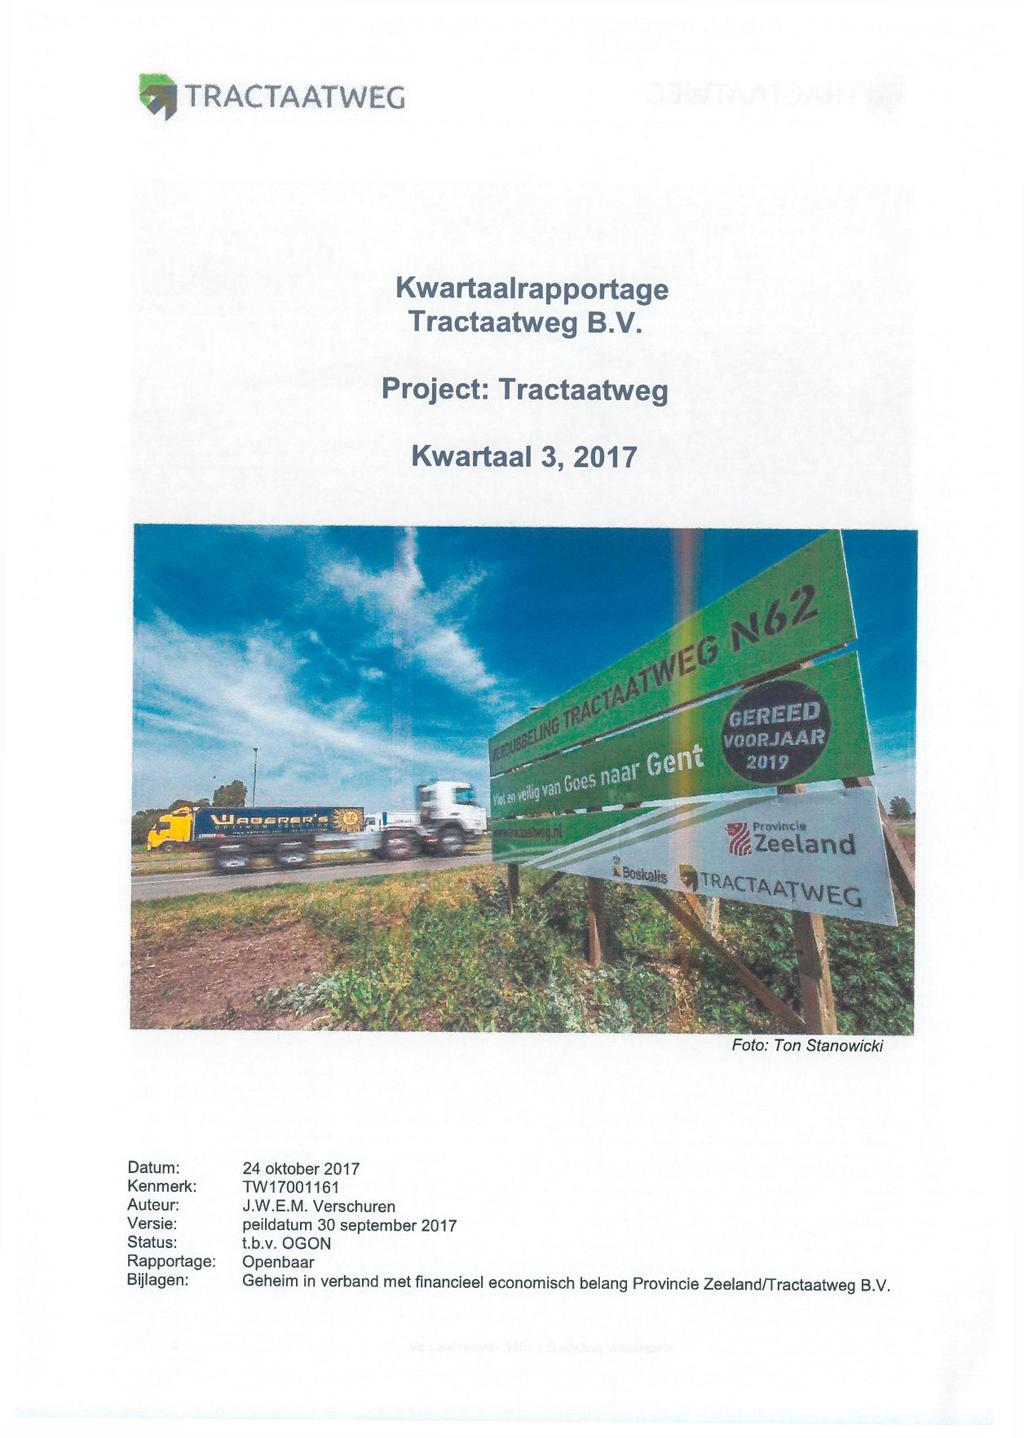 fļ TRACTAATWEG Kwartaalrapportage Tractaatweg B.V. Project: Tractaatweg Kwartaal 3, 2017 Foto: Ton Stanowicki Datum: 24 oktober 2017 Kenmerk: TW17001161 Auteur: J.W.E.M.